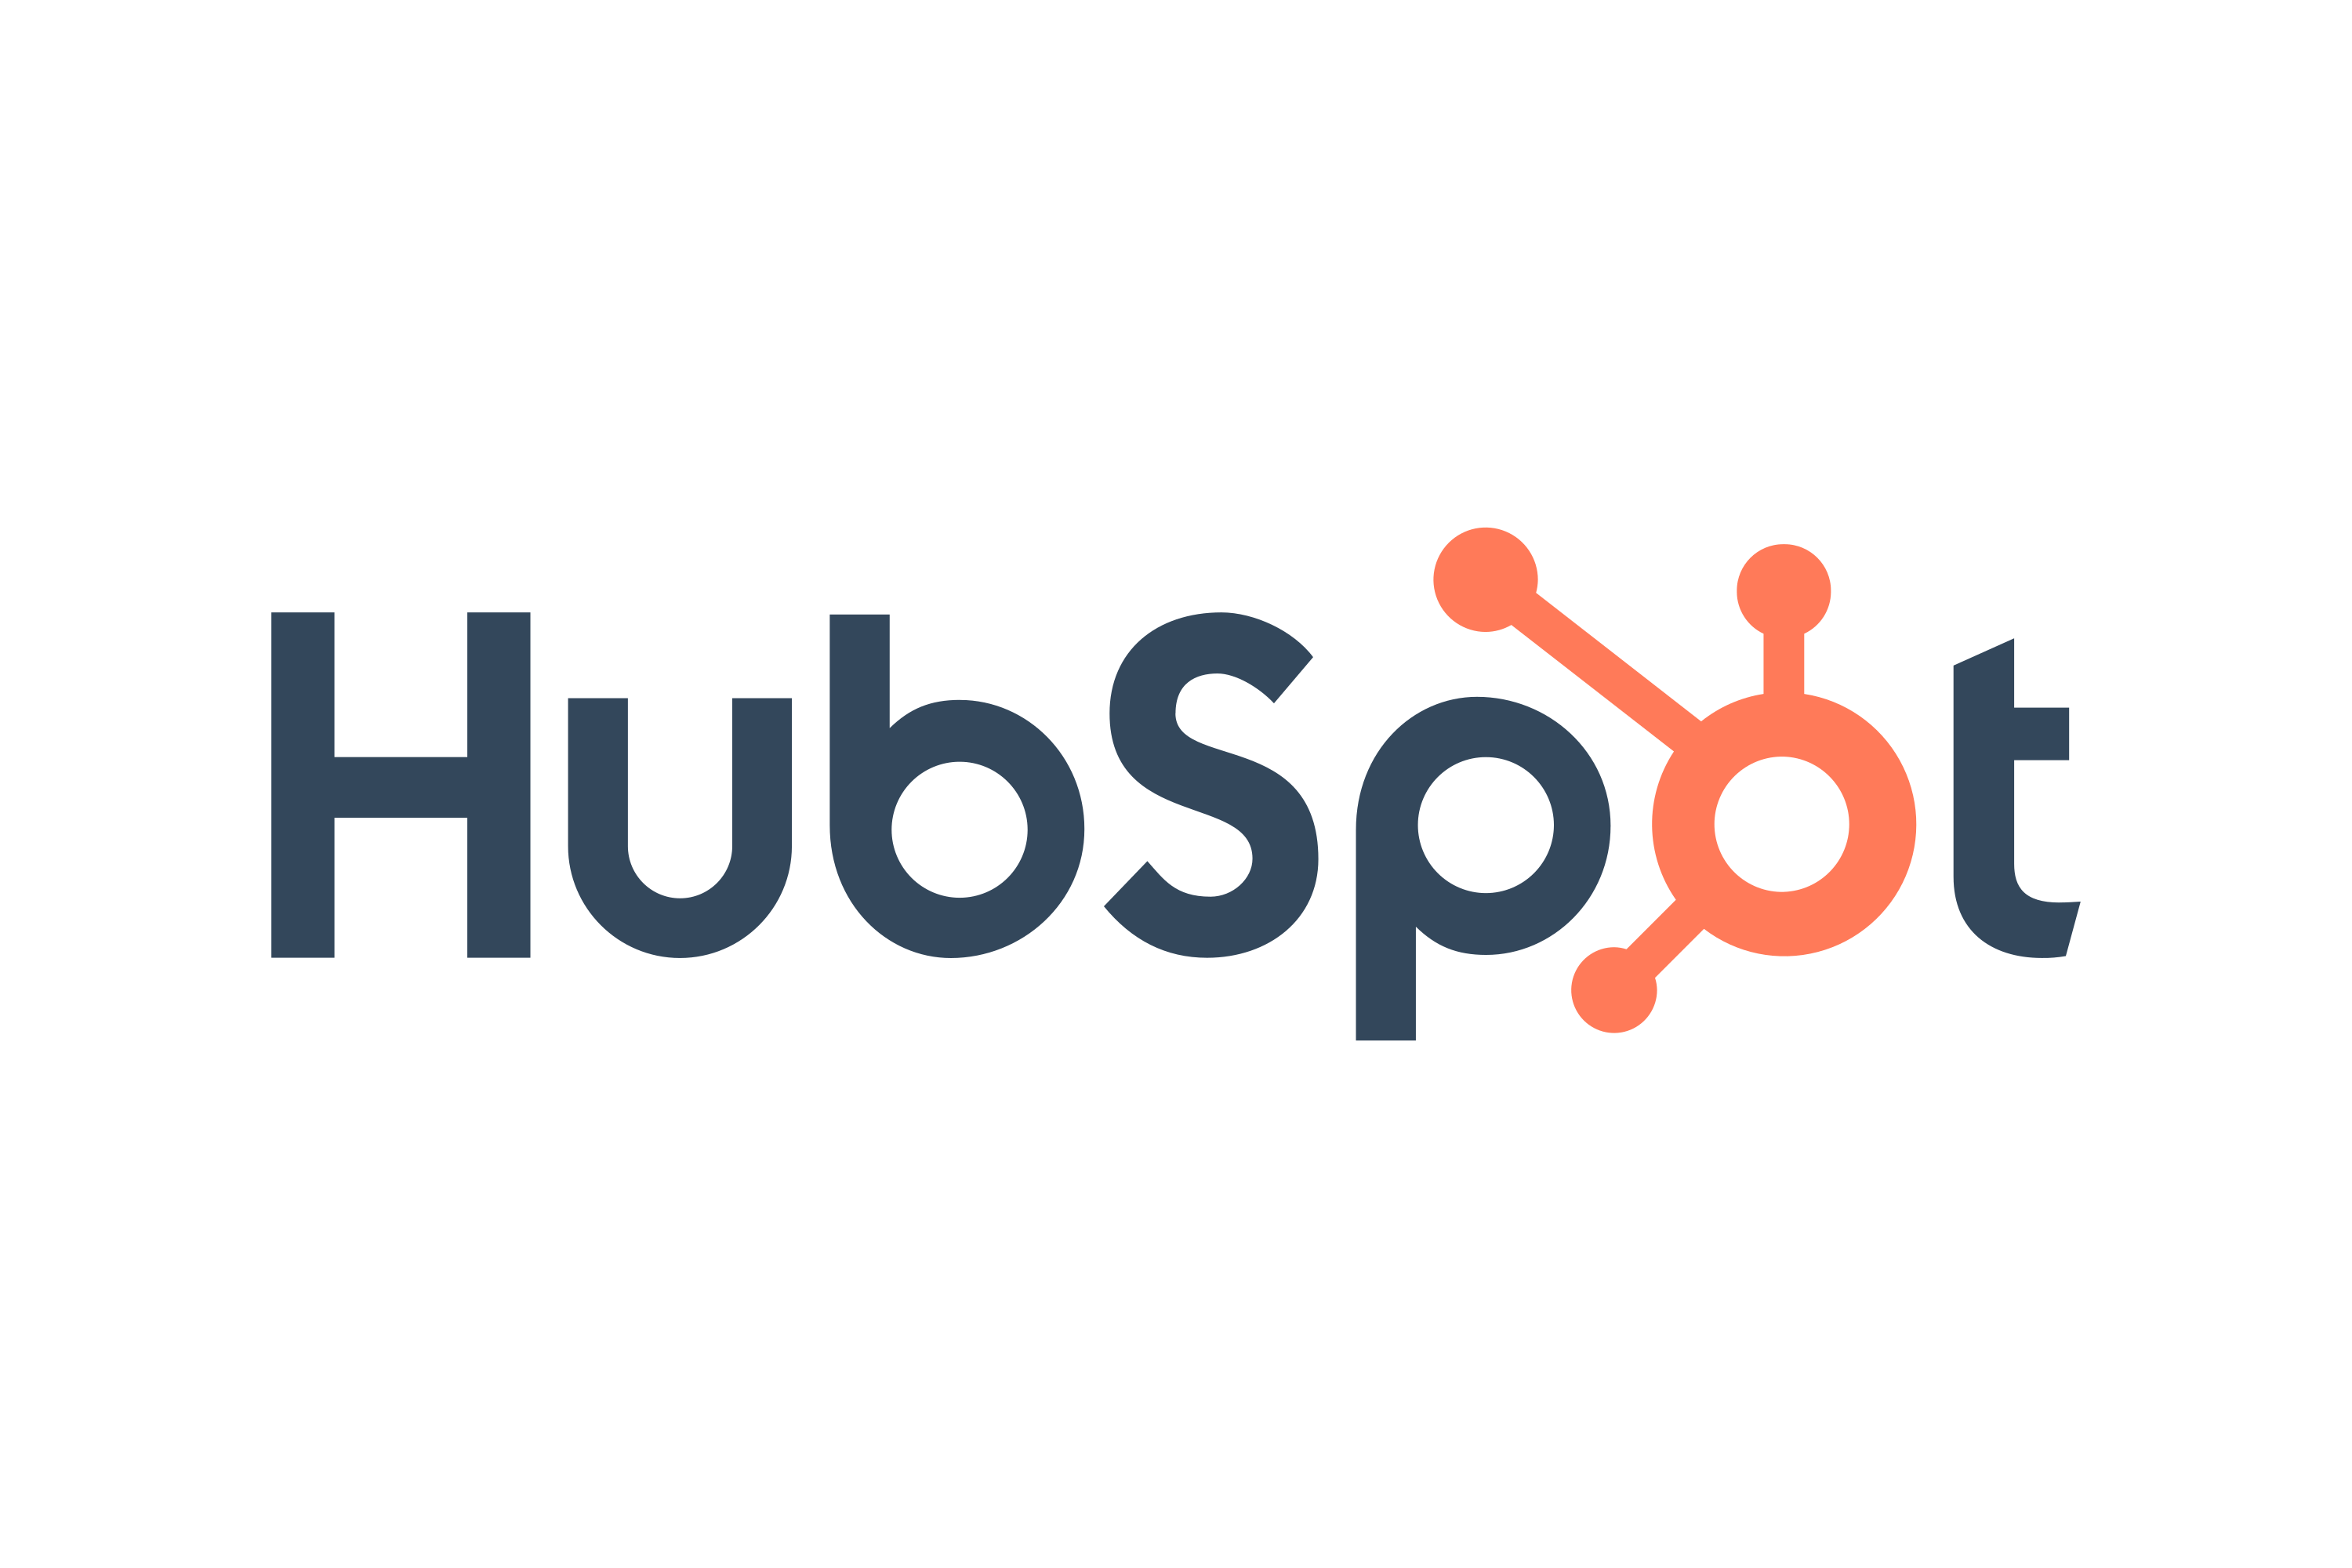 HubSpot integration is live